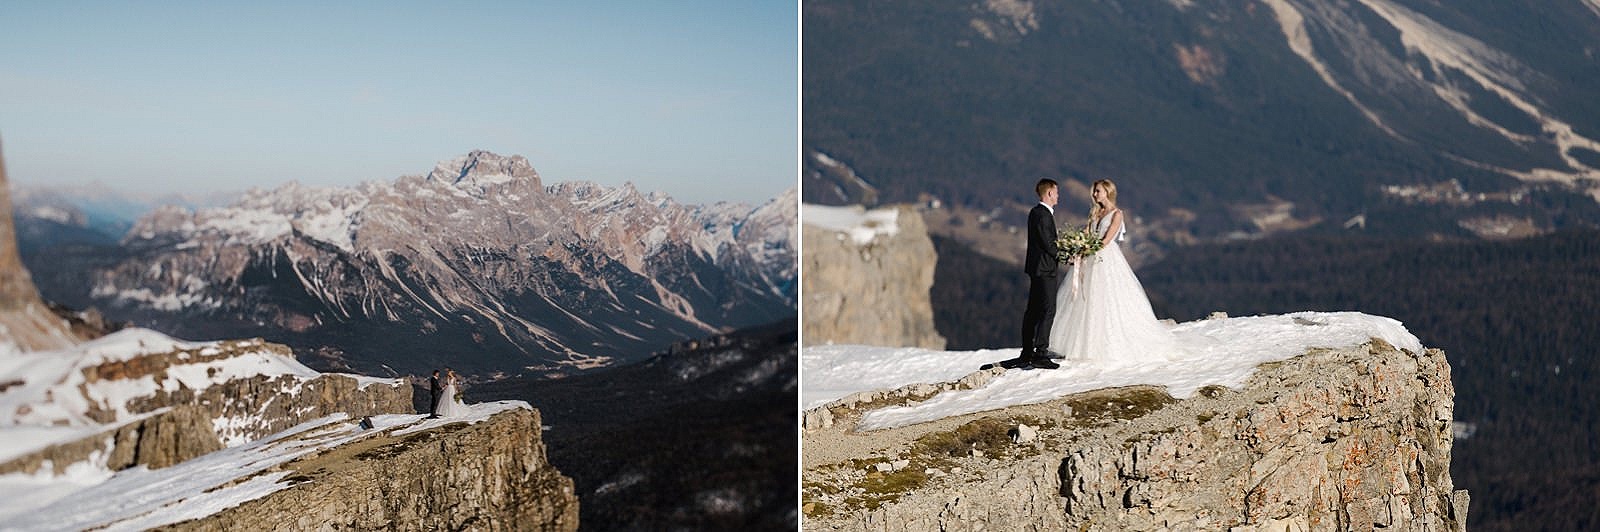 Adventurous+Dolomites+Elopement+Wedding+Fotomagoria17.jpg